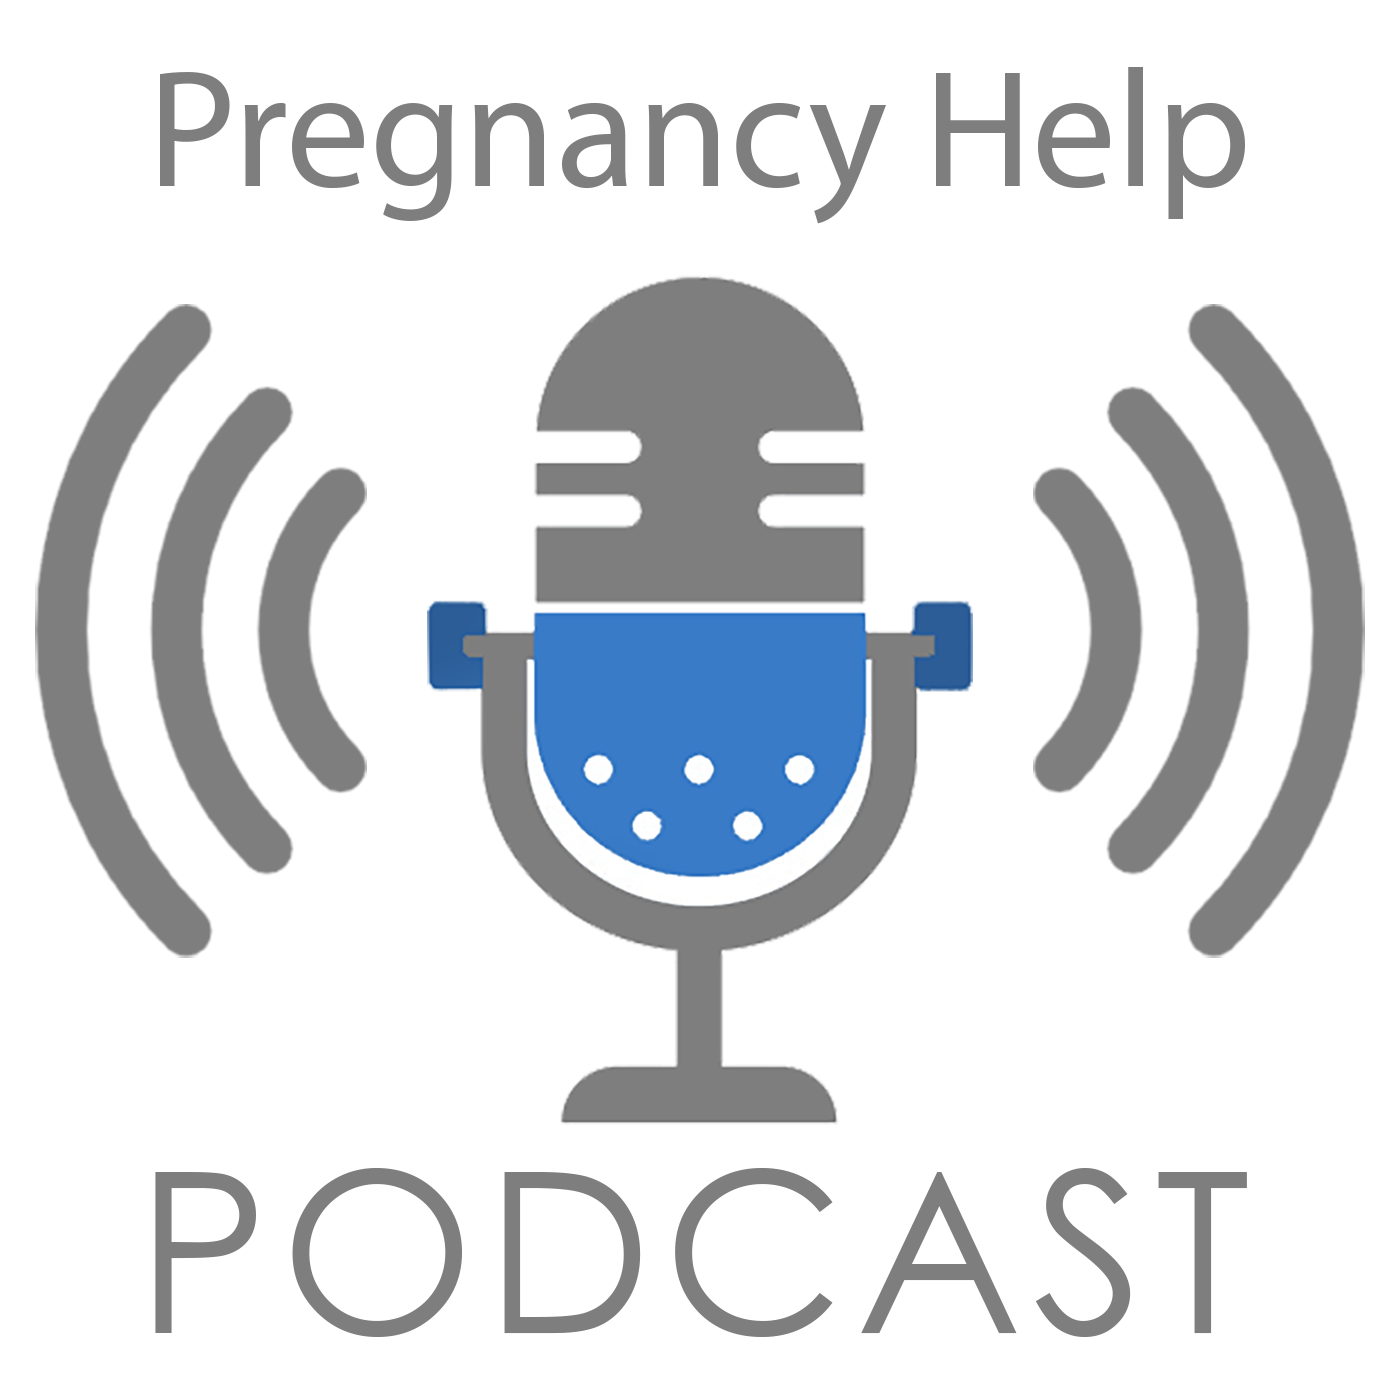 Pregnancy Help Podcast